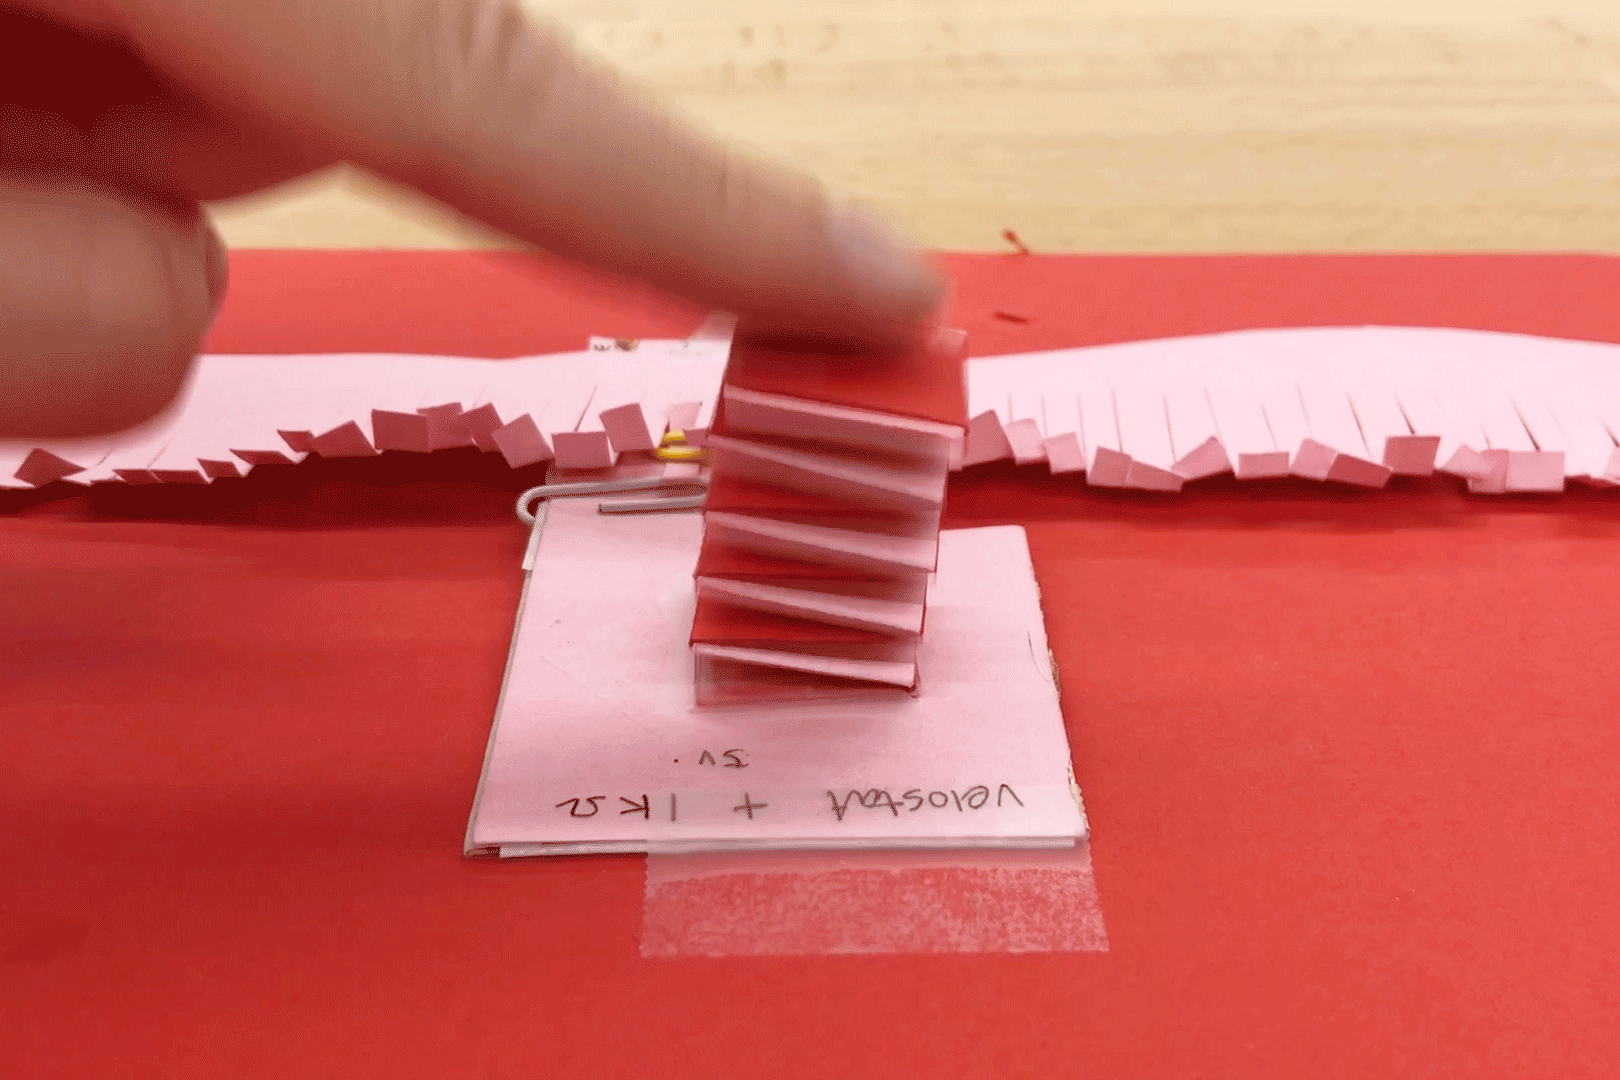 Animation of pressing on the sensor.